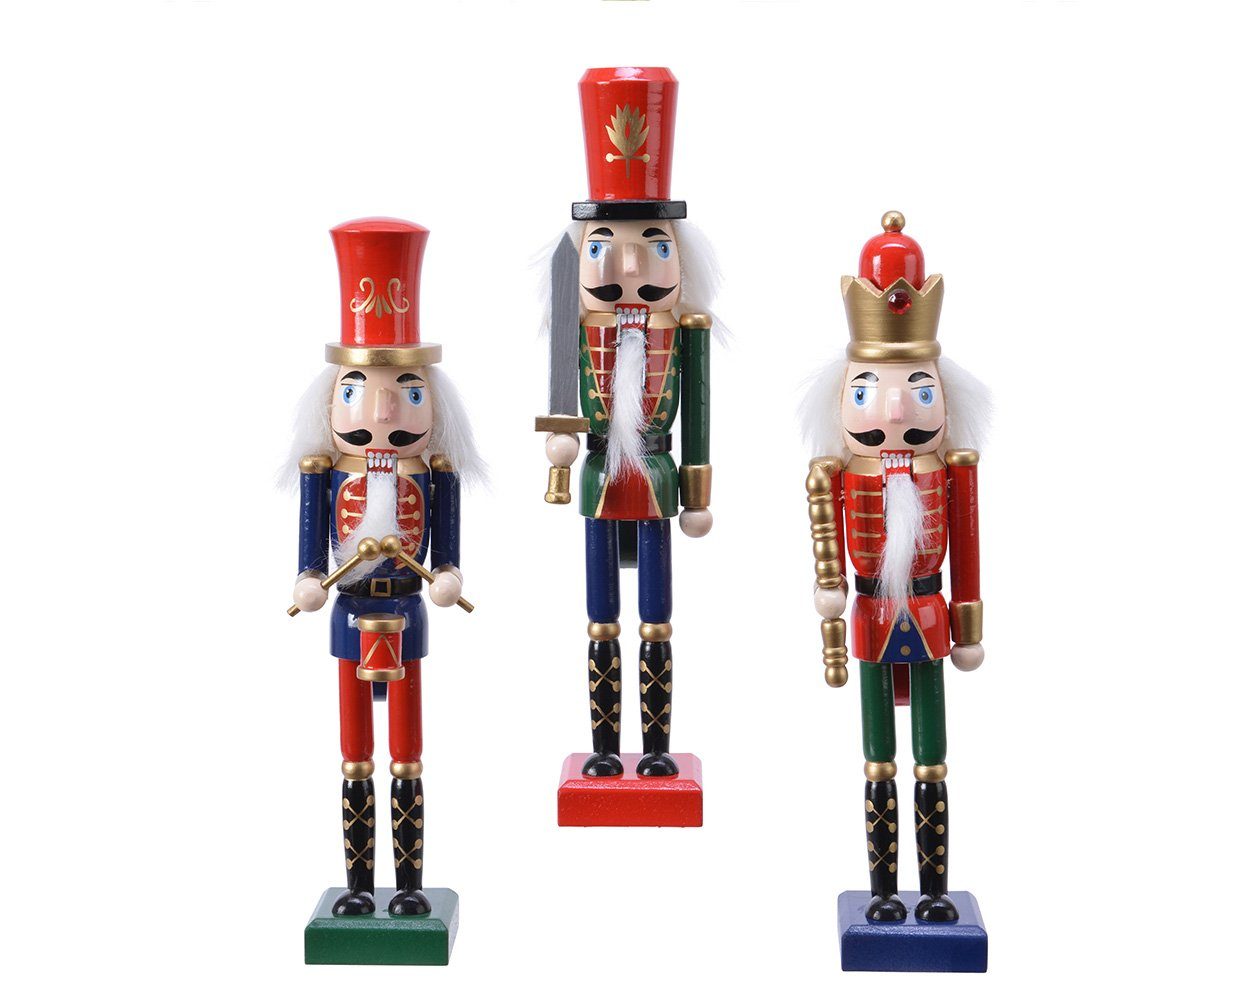 Decoris season decorations Weihnachtsfigur, Nussknacker Figur Holz Craquele 25cm bunt, 1 Stück sortiert